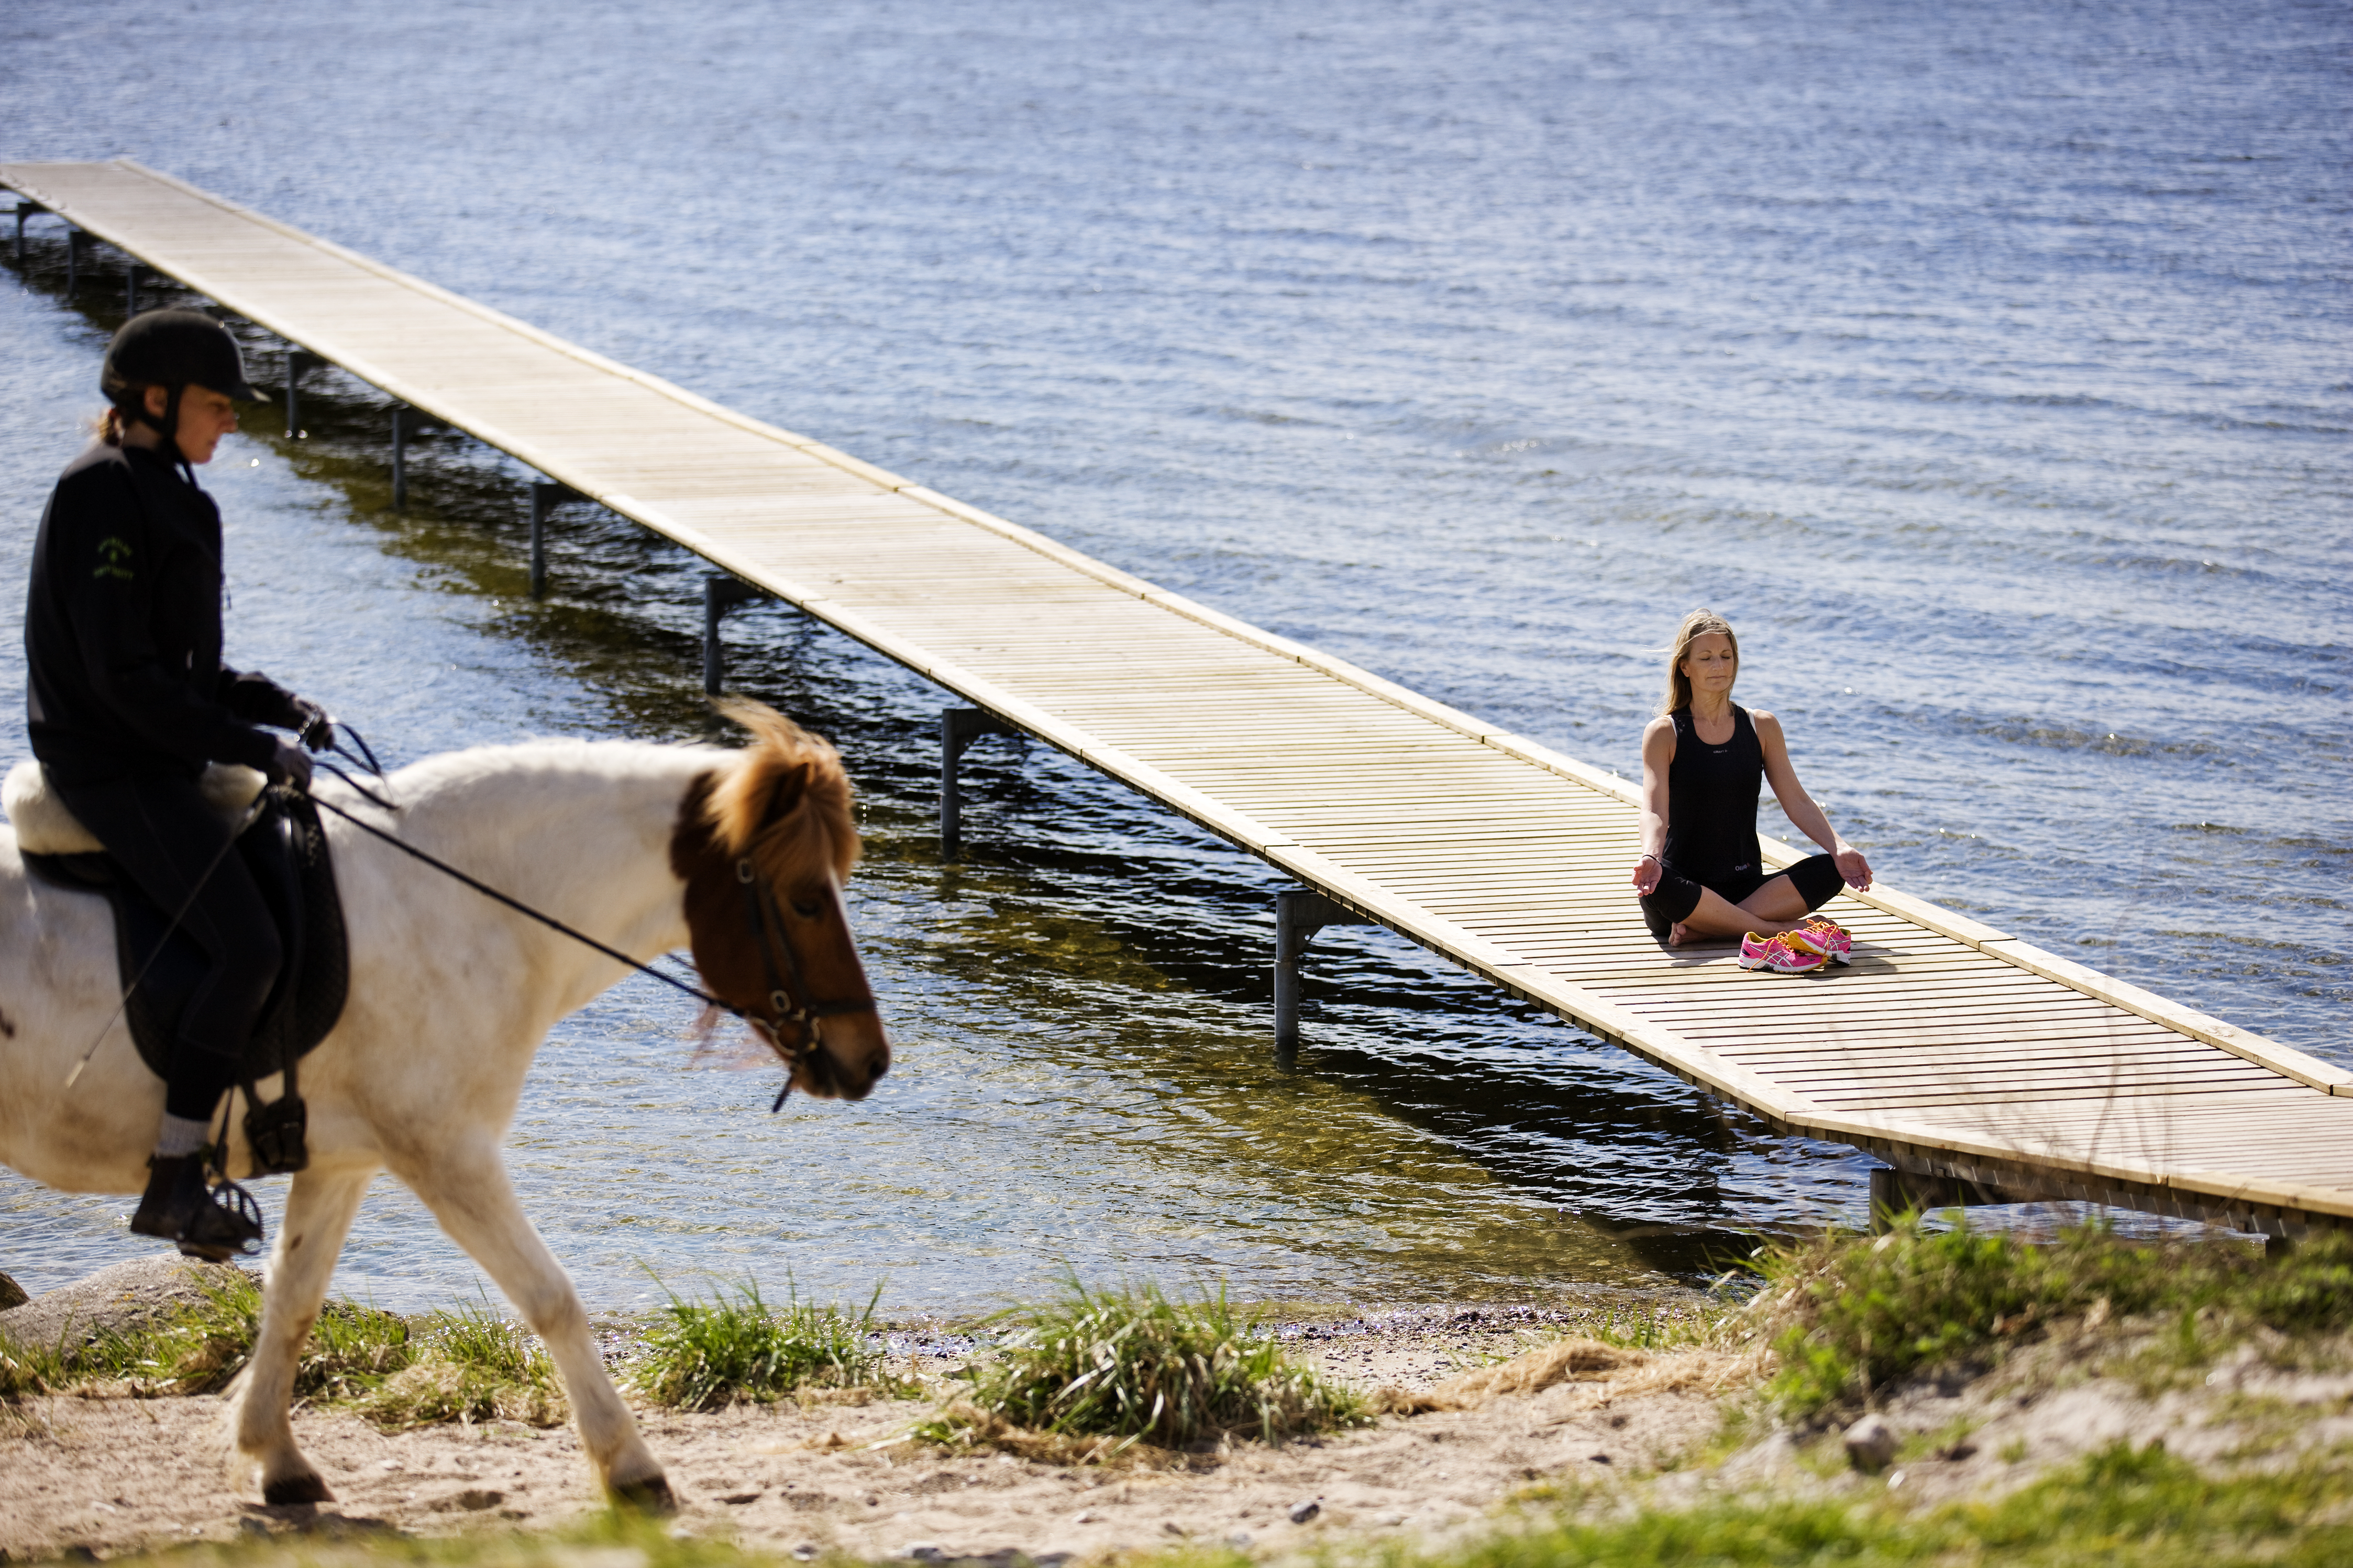 Woman meditating by water and a woman horseback riding